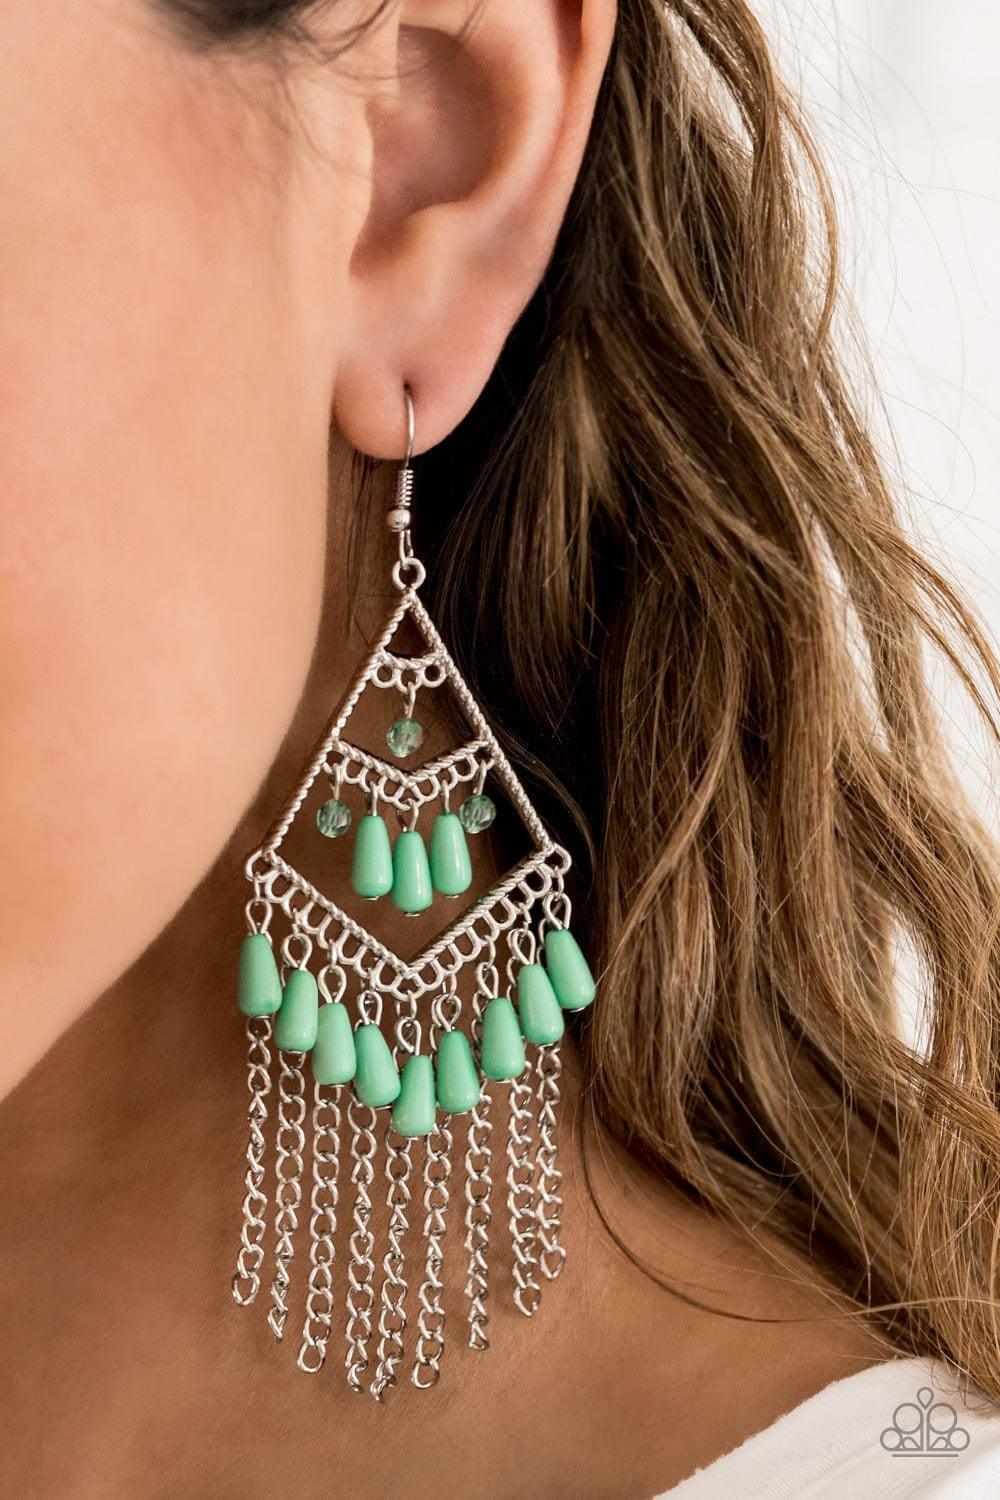 Paparazzi Accessories - Trending Transcendence - Green Earrings - Bling by JessieK